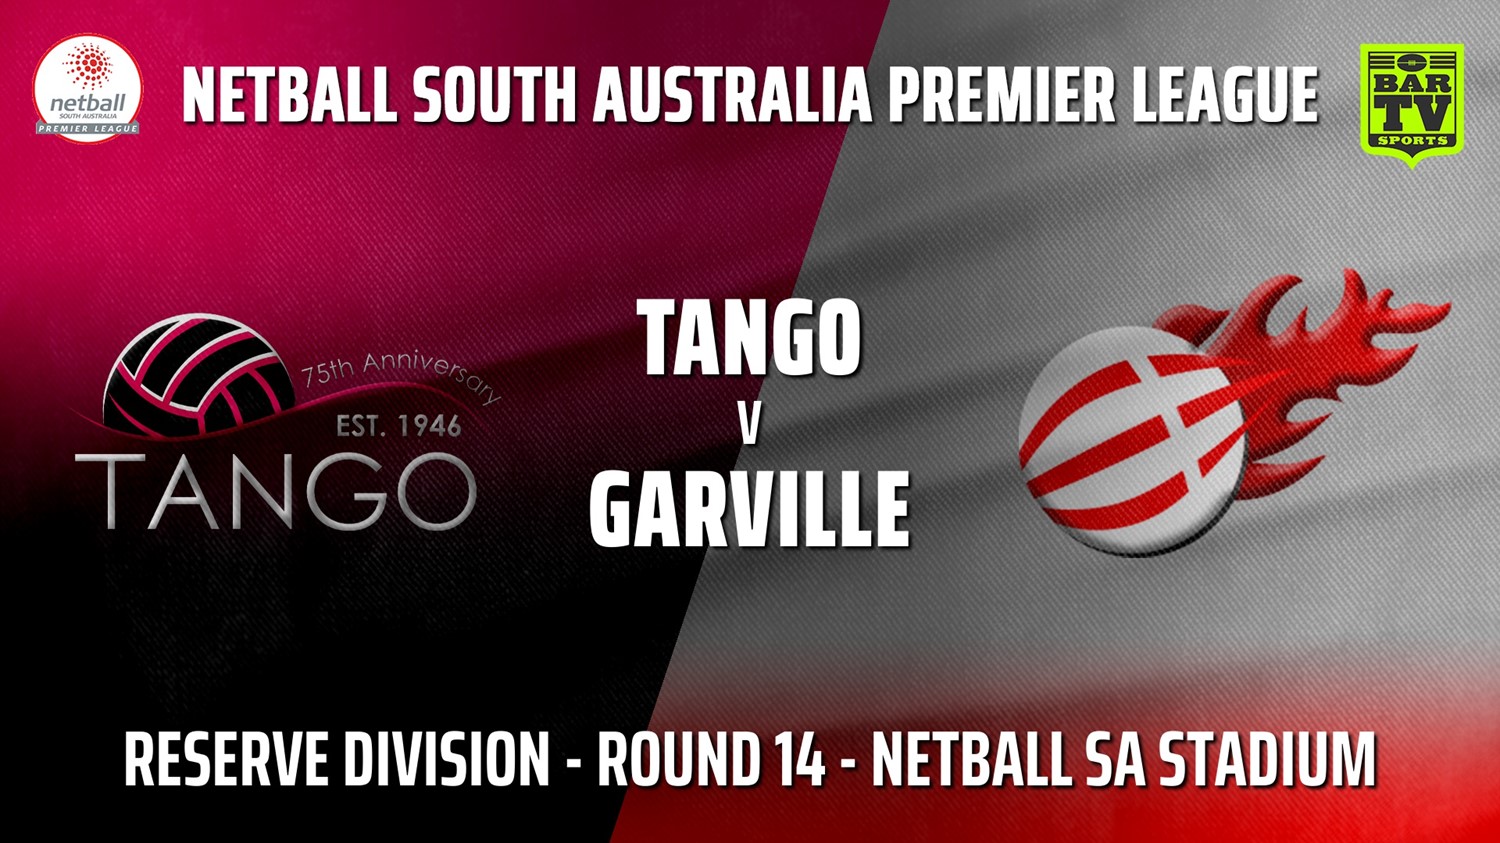 210813-SA Premier League Round 14 - Reserve Division - Tango v Garville Slate Image